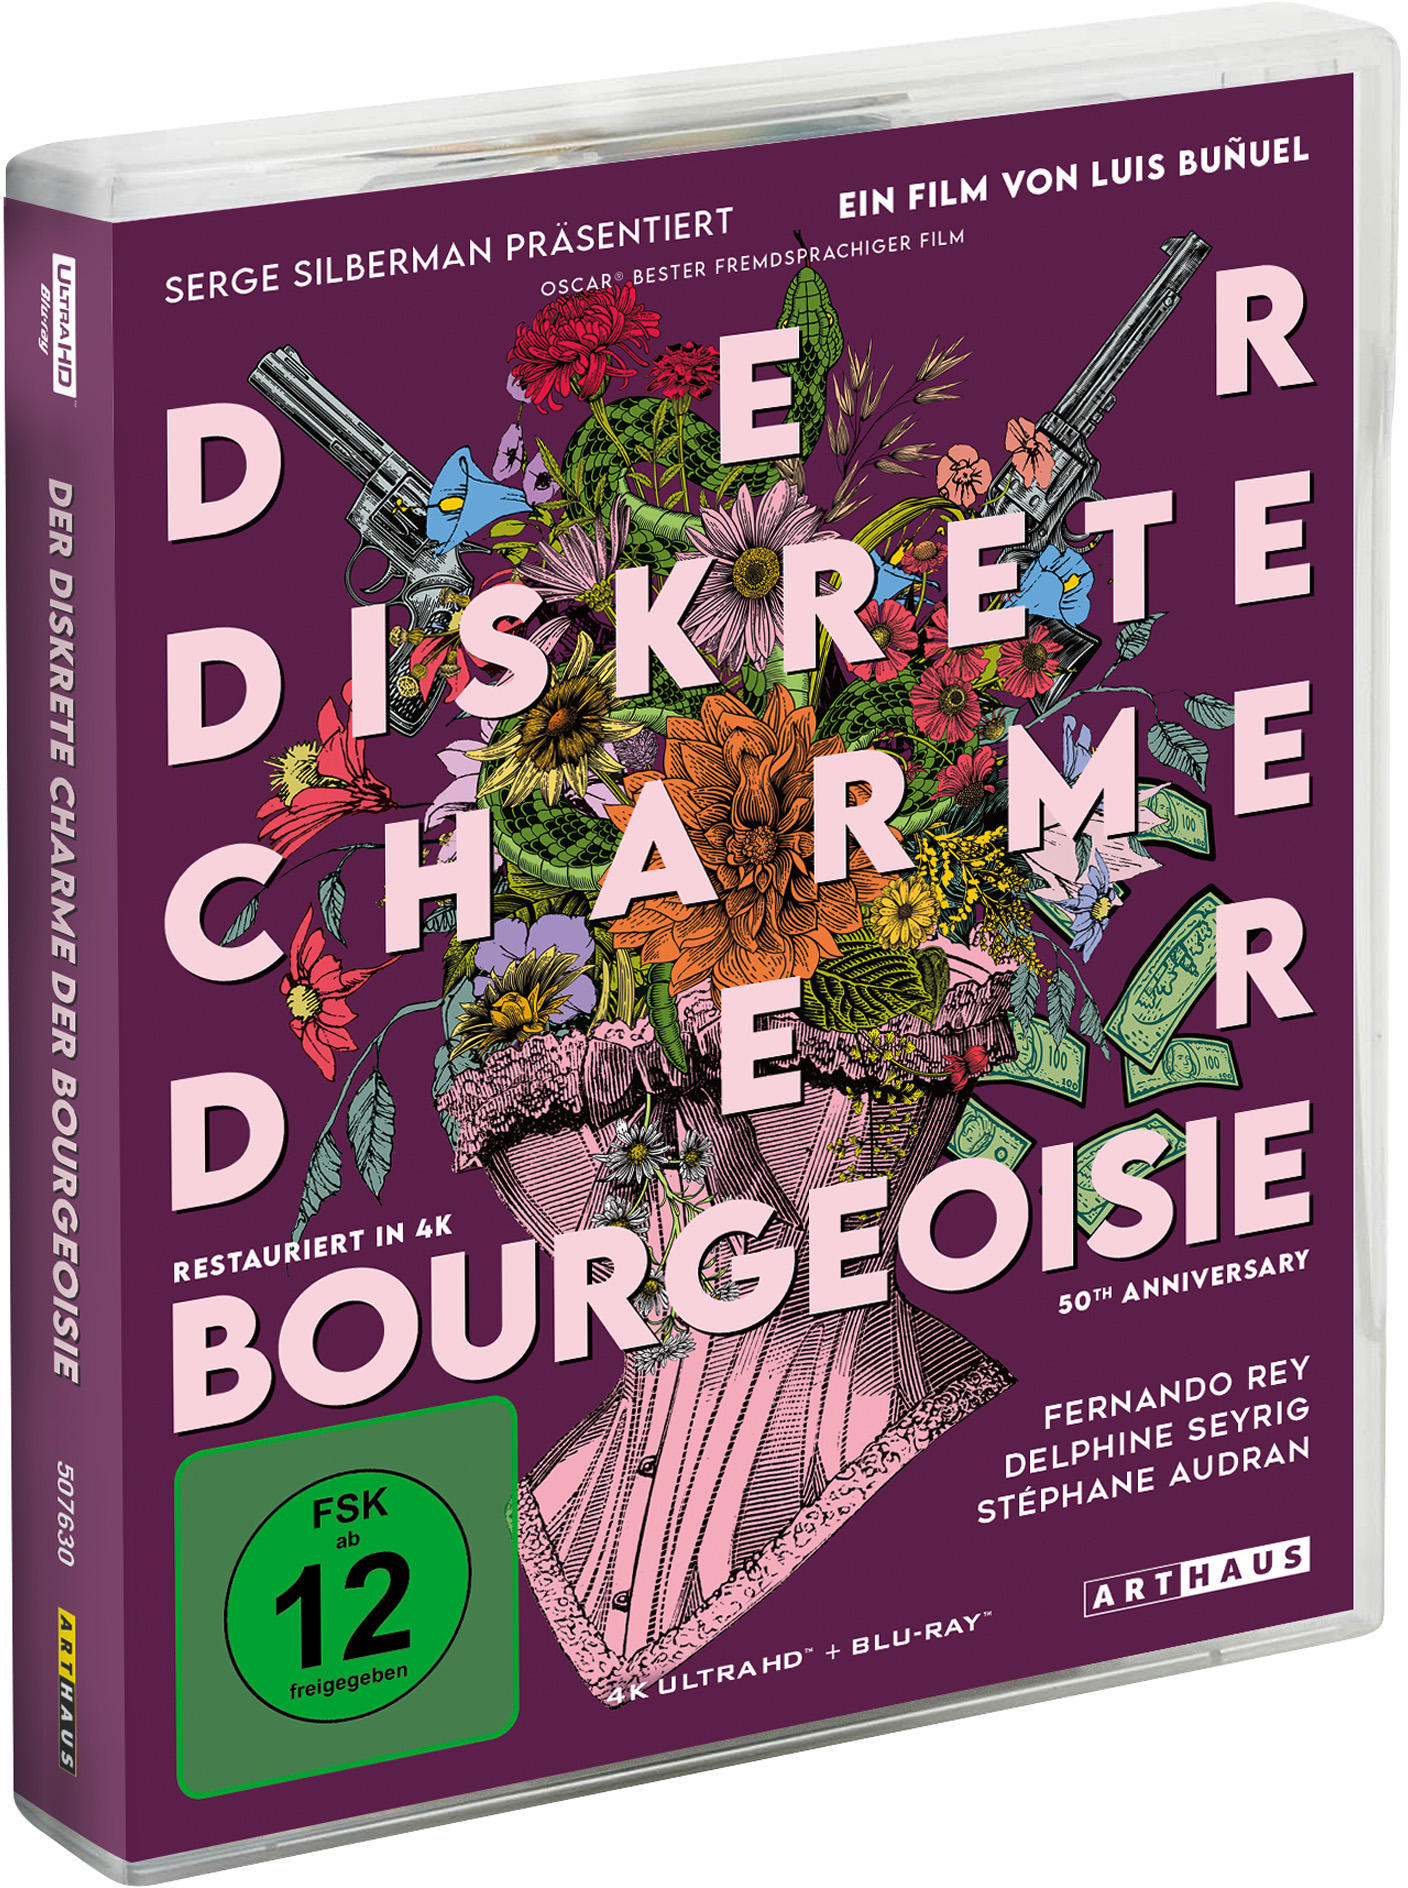 HD + Blu-ray 4K Blu-ray diskrete Der Charme der Ultra Bourgeoisie